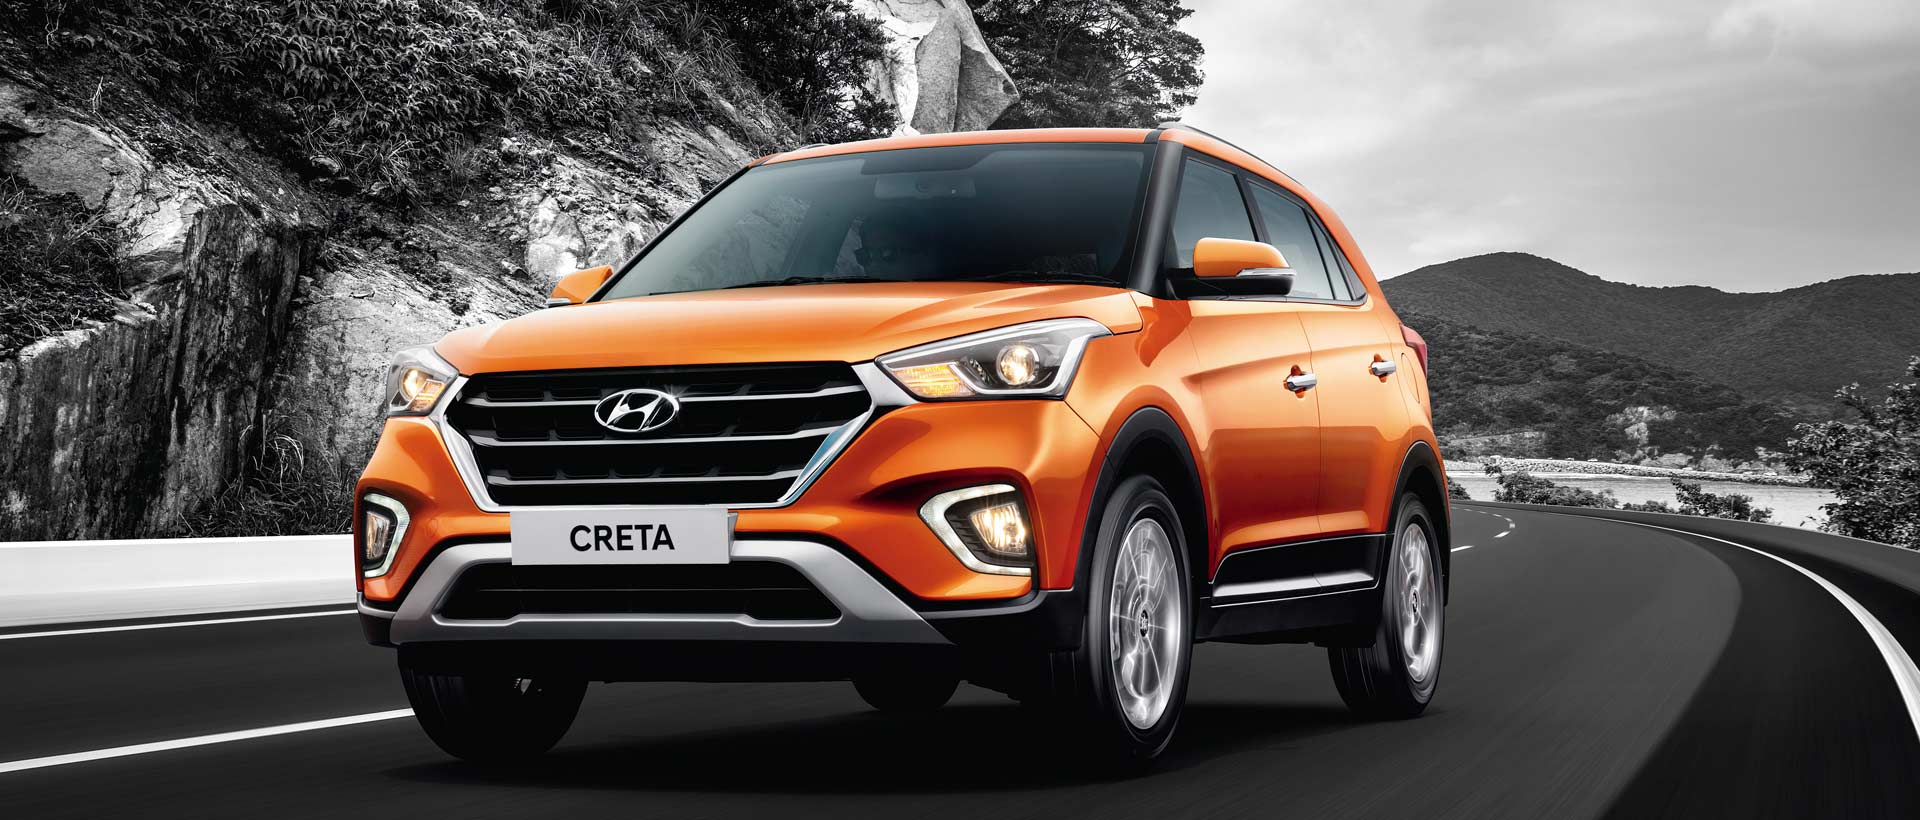 2018-Hyundai-Creta-facelift_4